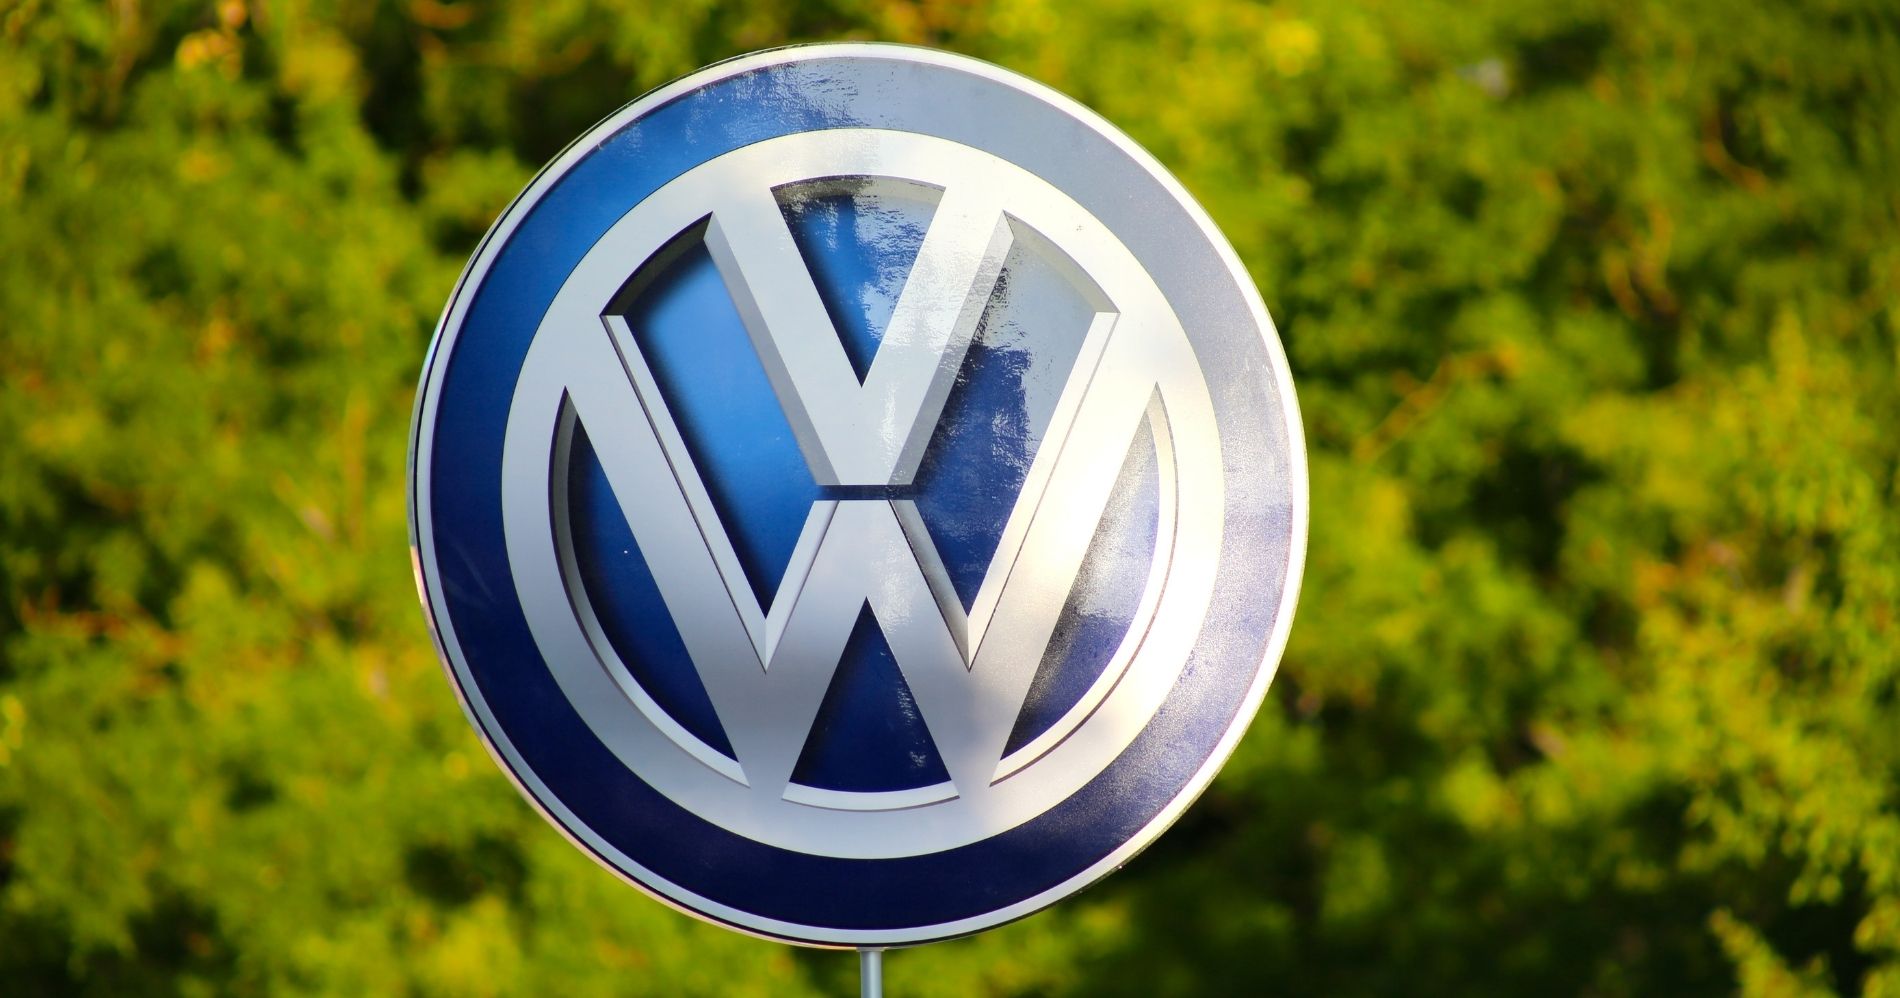 Bos VW Pilih Mobil Otonom Ketimbang Mobil Listrik Illustration Bisnis Muda - Image: Canva